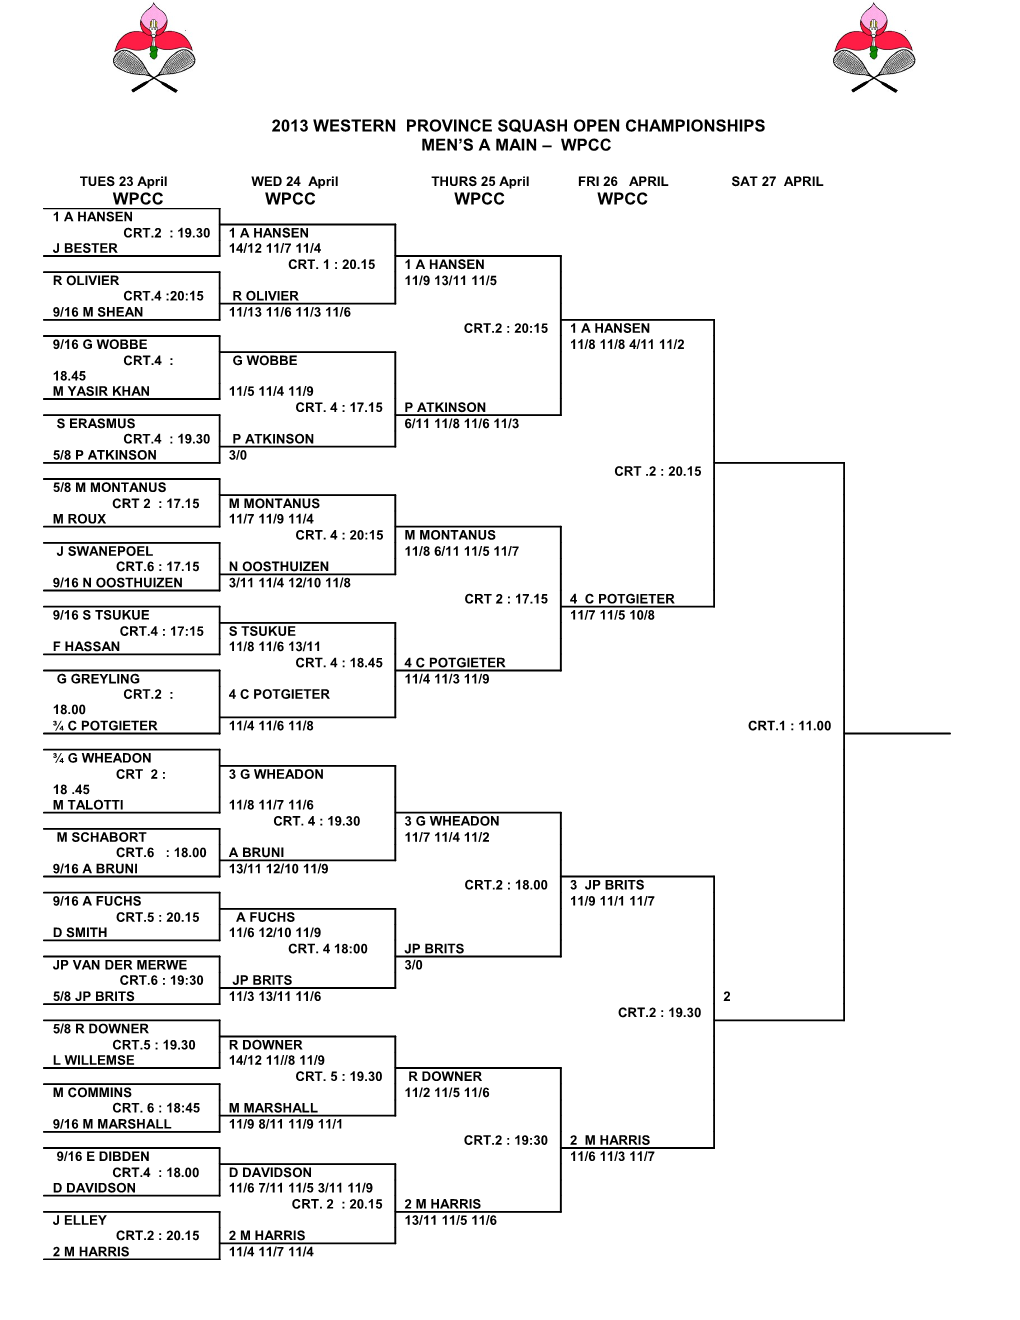 2004 Western Province Squash Closed Championship